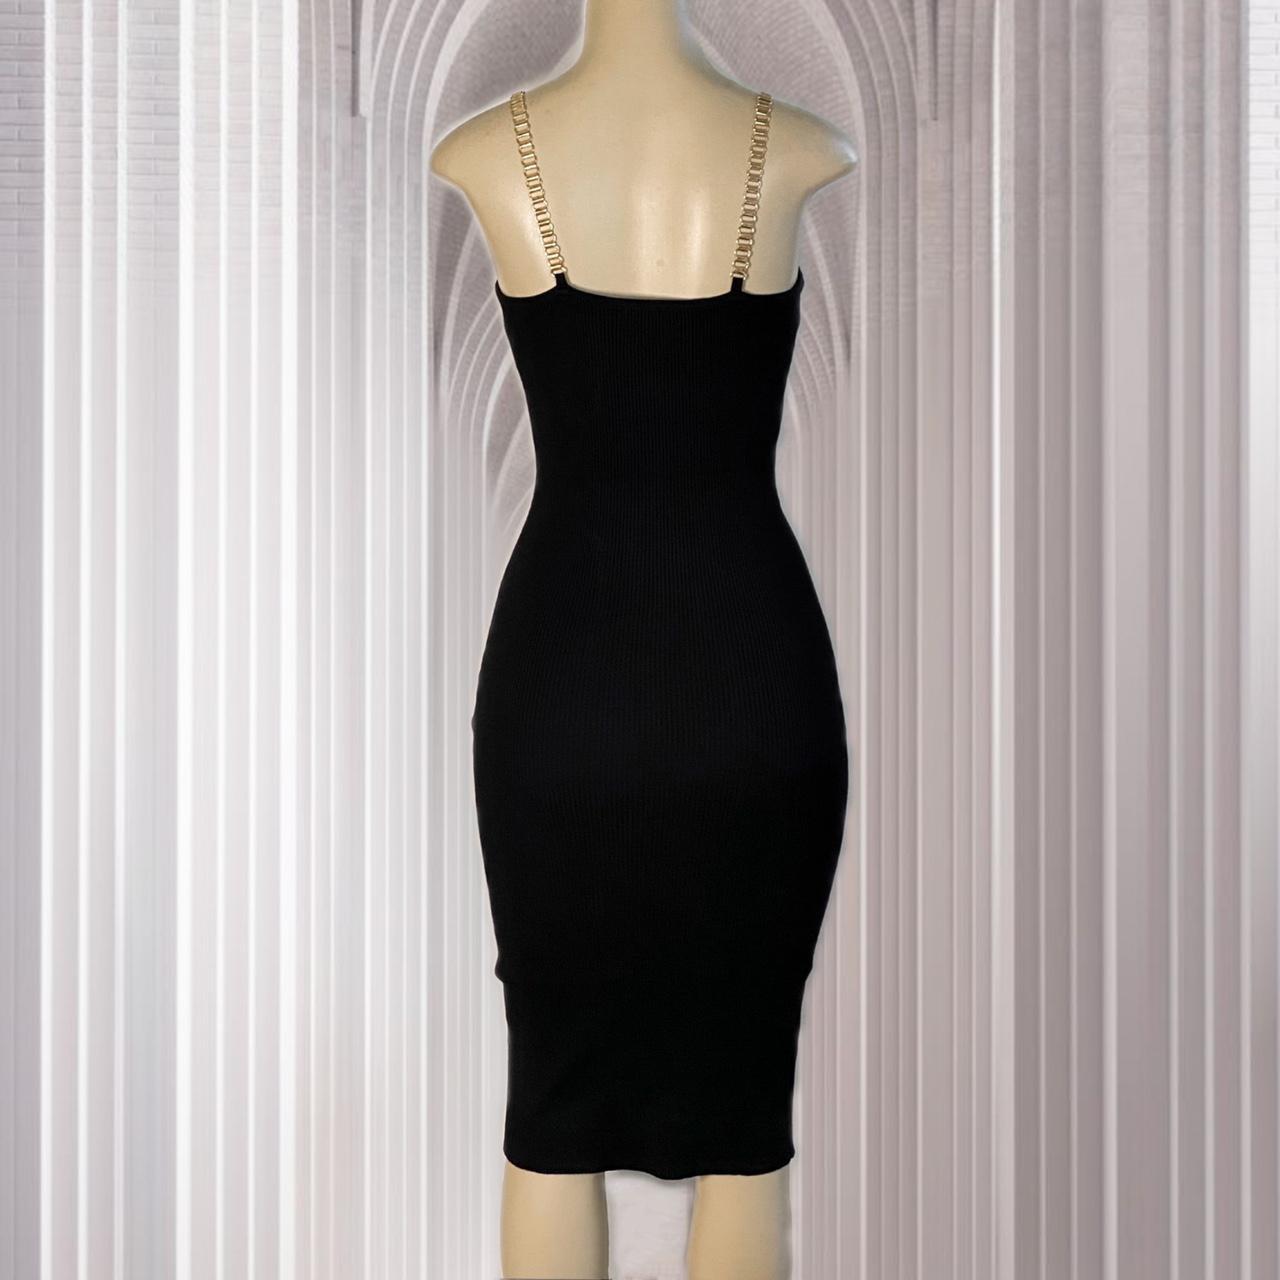 Gorman Women's Black and Gold Dress (3)